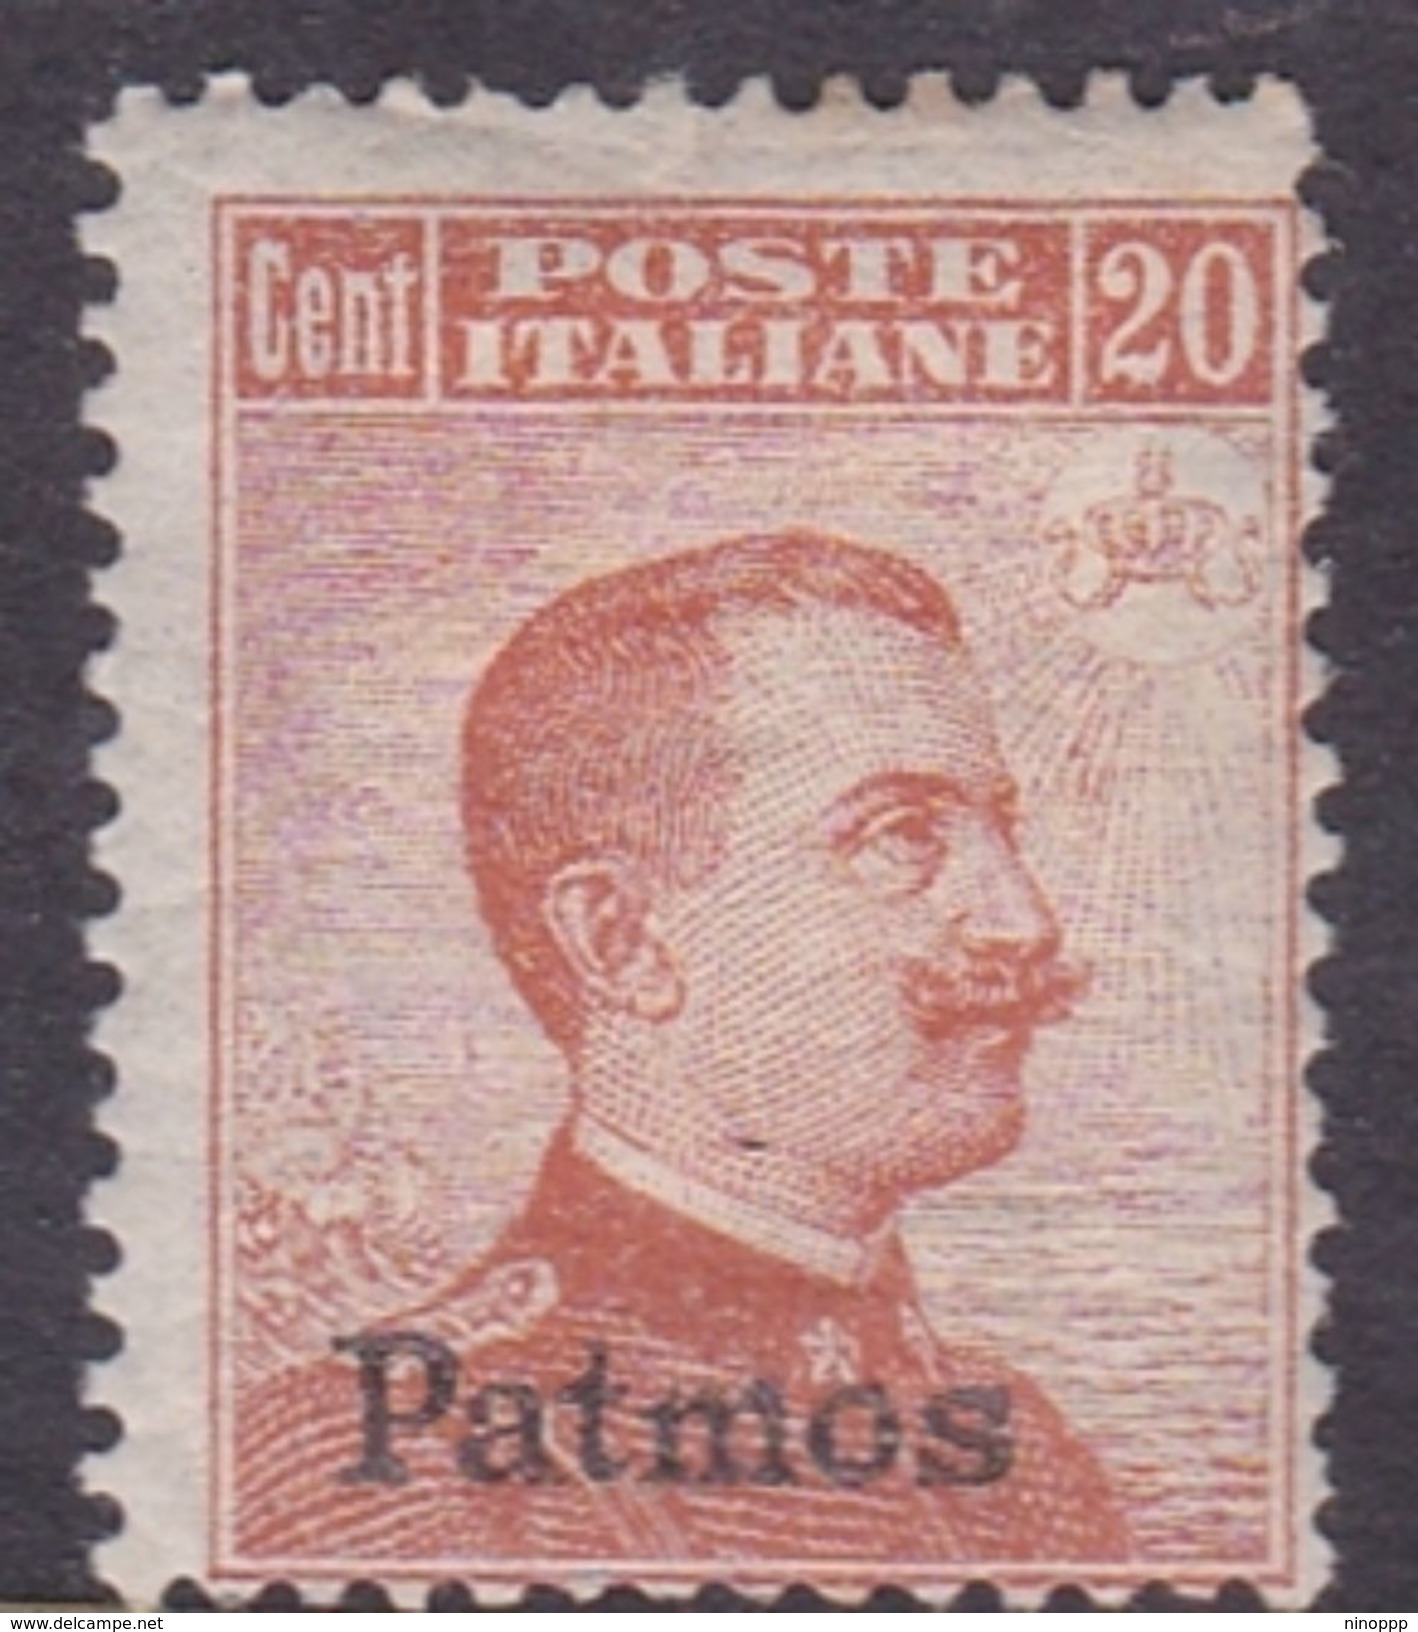 Italy-Colonies And Territories-Aegean-Patmo S9 1917 20c Brown Orange No Watermark MH - Aegean (Patmo)